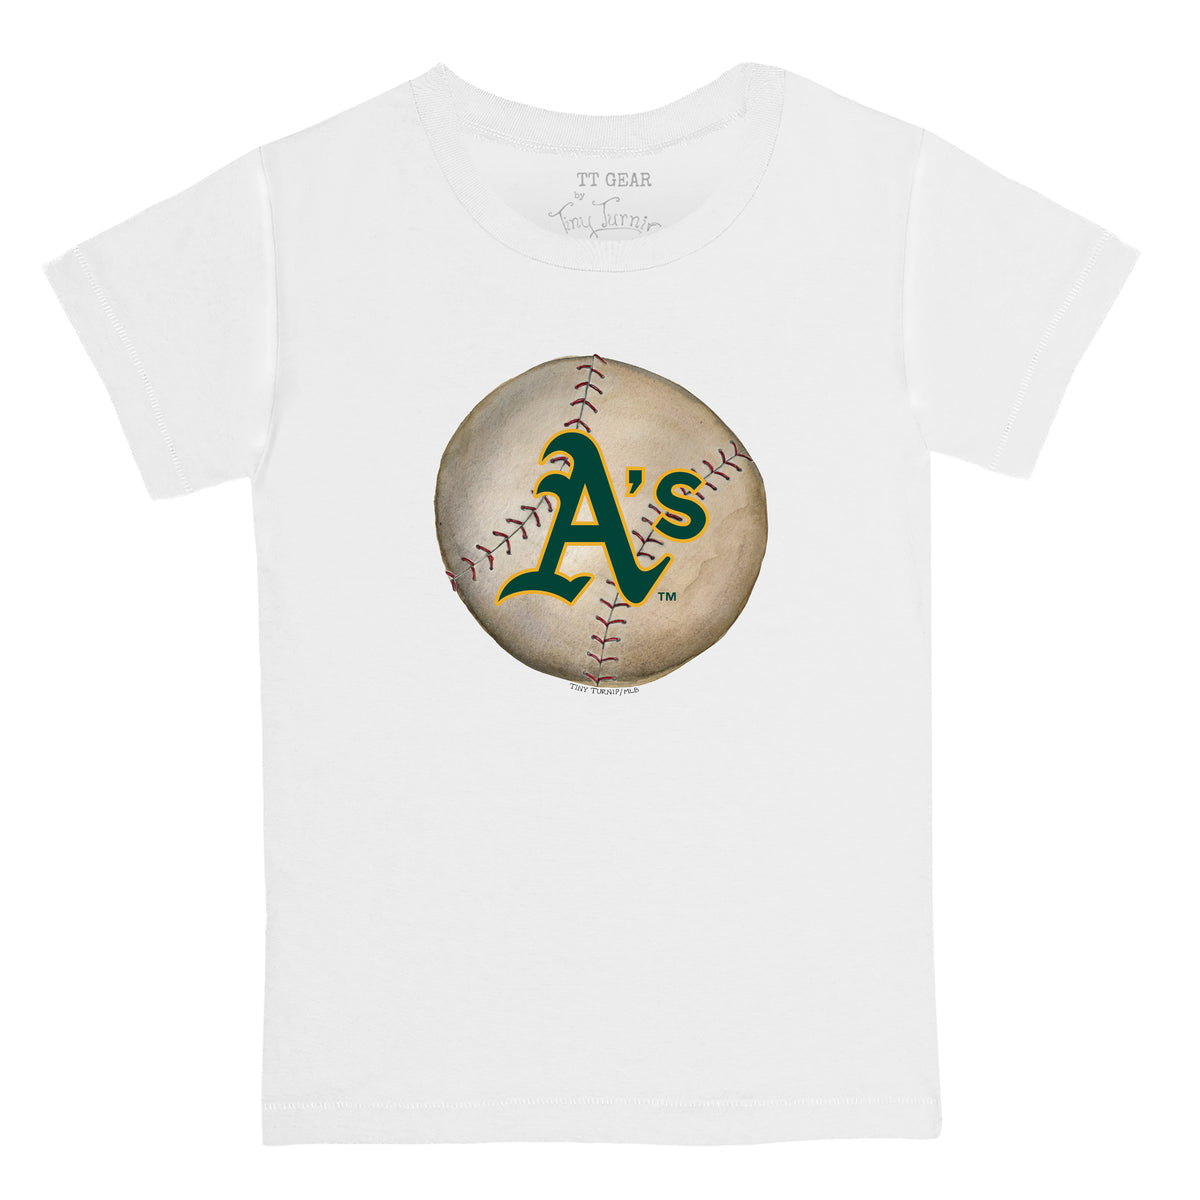 Oakland Athletics Stitched Baseball Tee Shirt